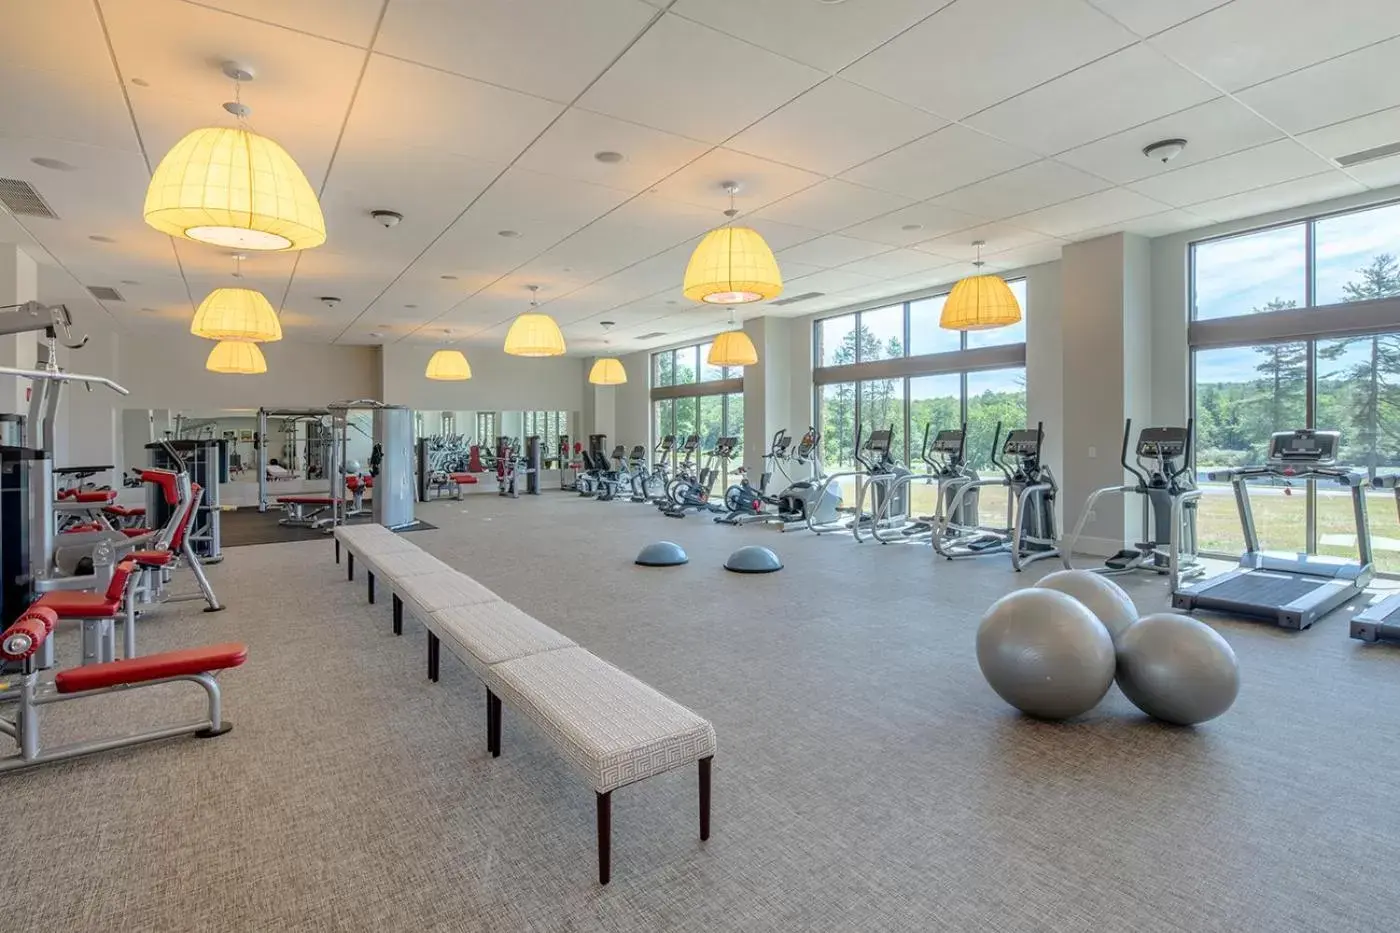 Fitness centre/facilities, Fitness Center/Facilities in YO1 Longevity & Health Resorts, Catskills